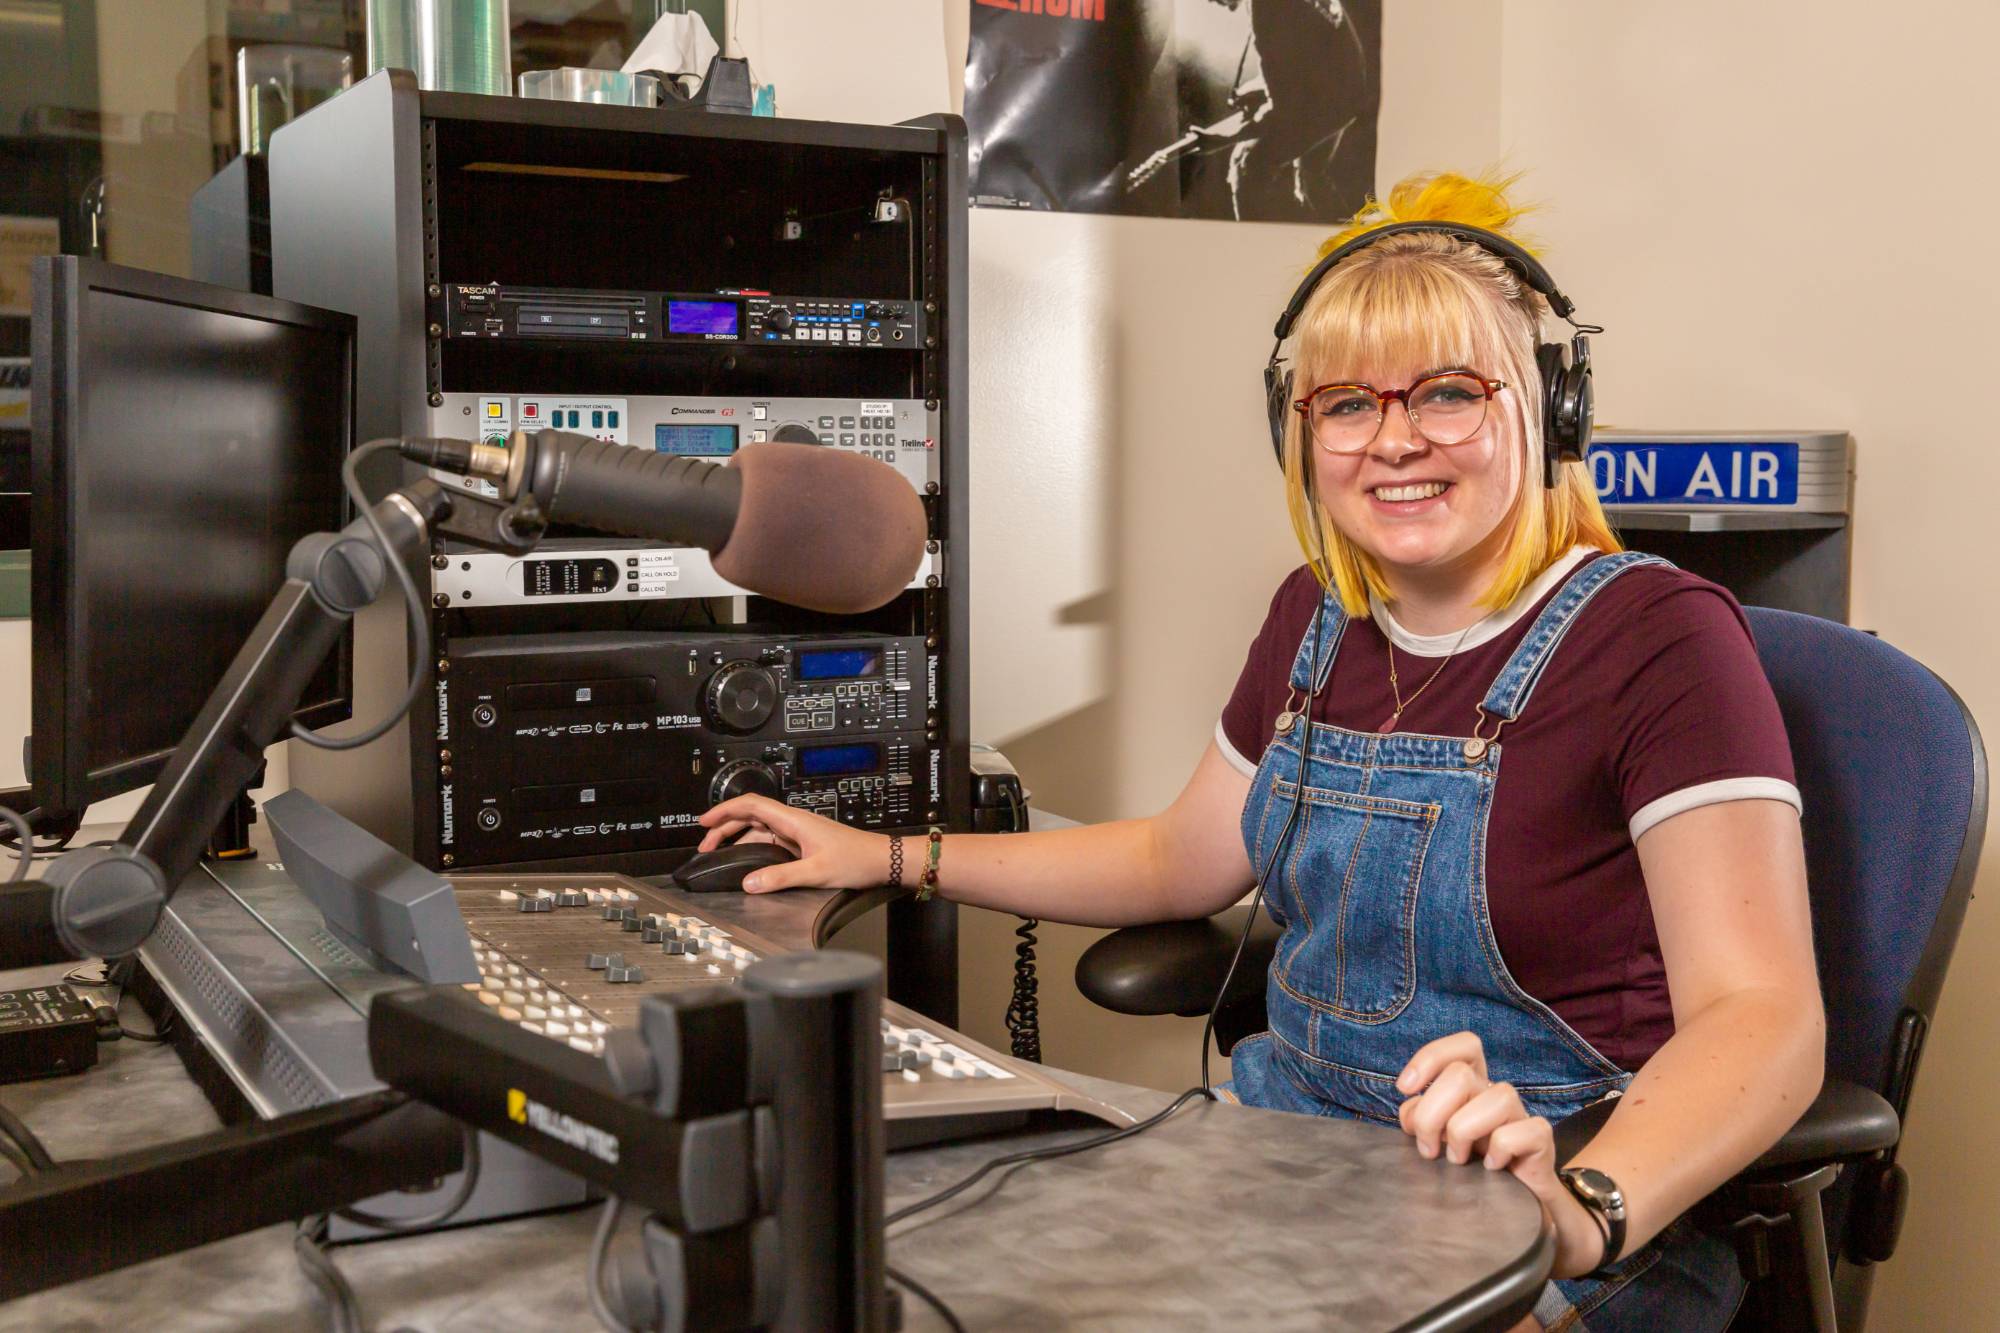 GV student wearing headphones sits in the Whale Radio studio